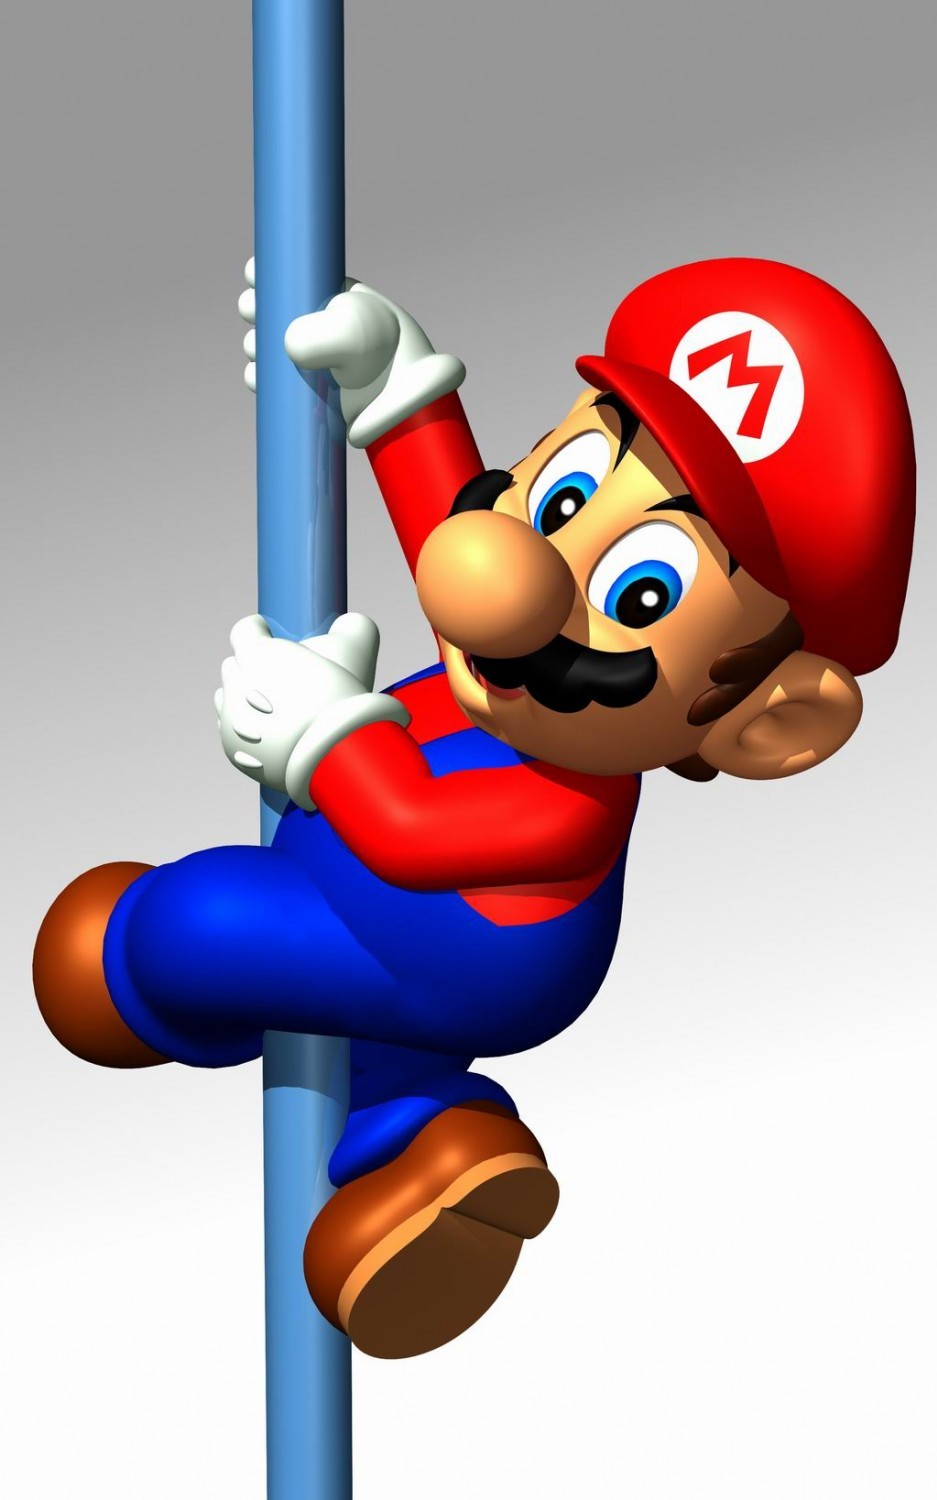 Mario on a pole